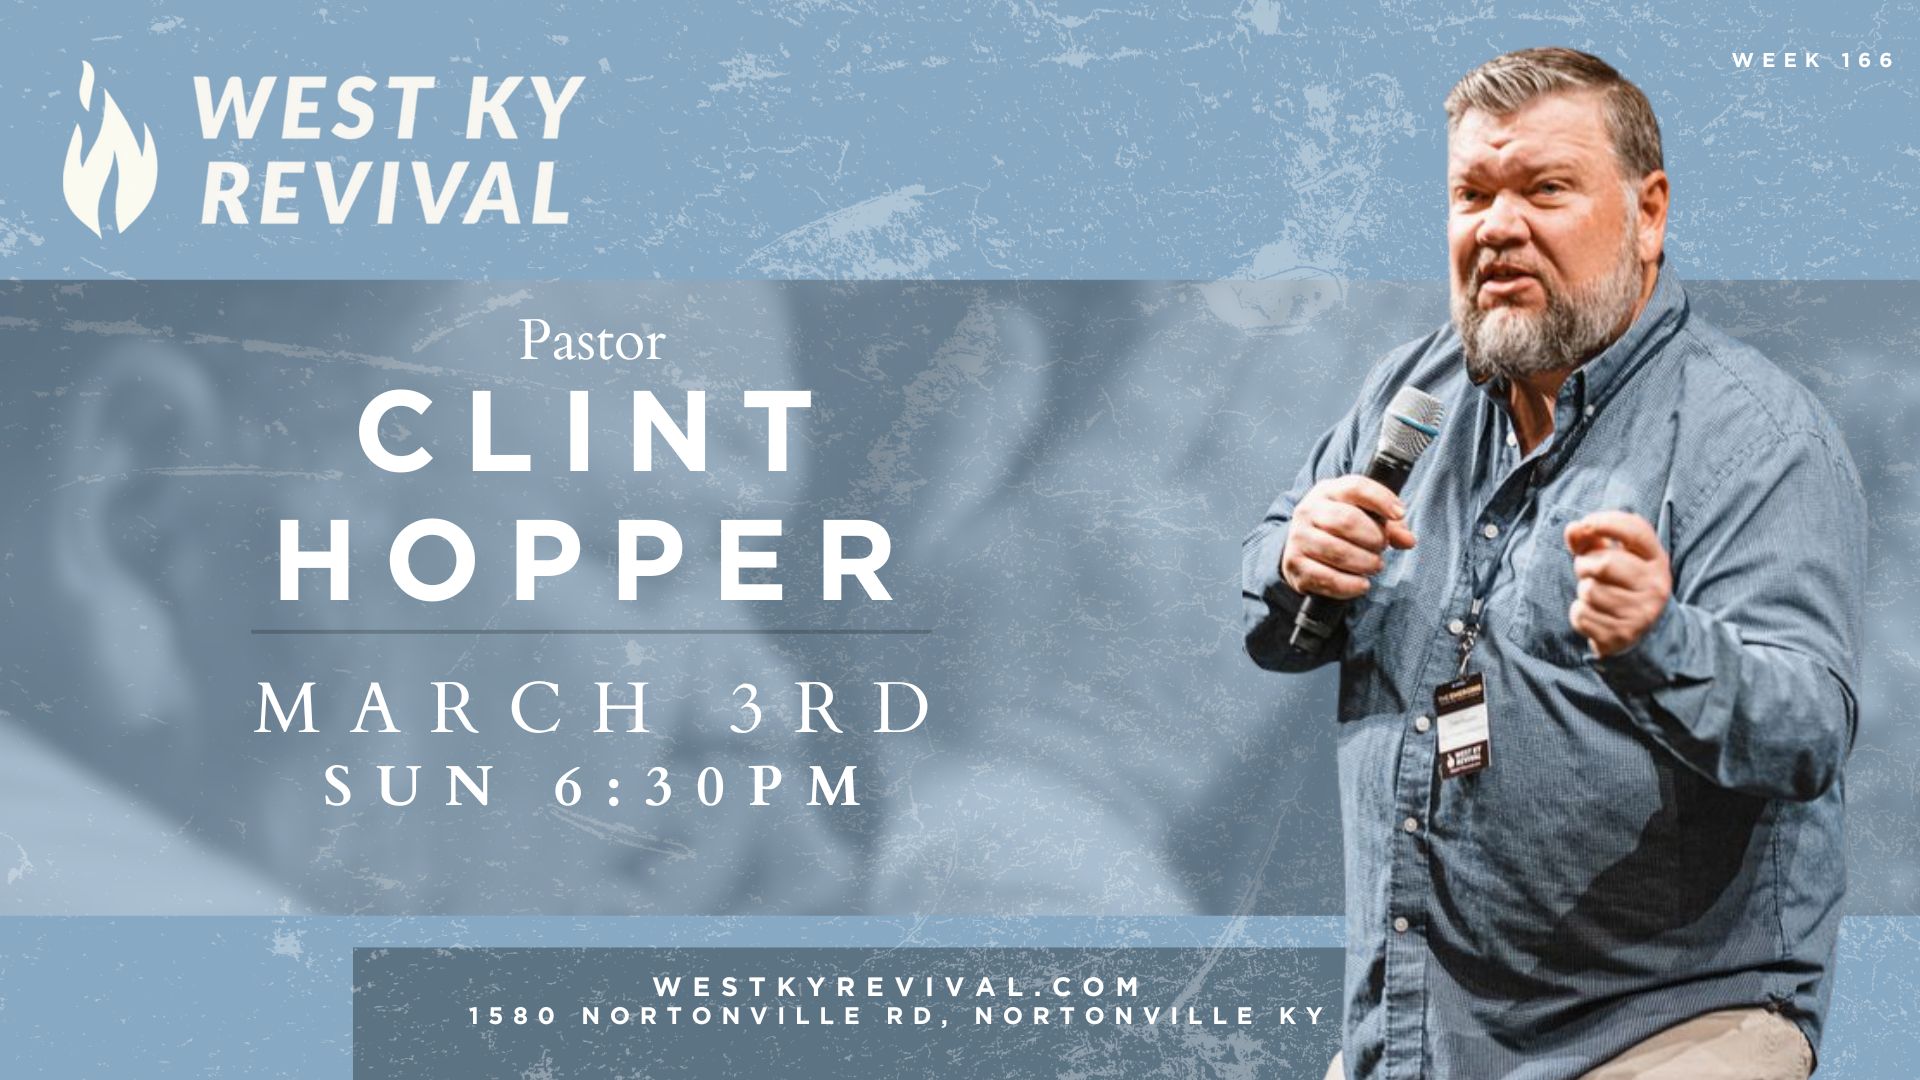 Revival Clint Hopper